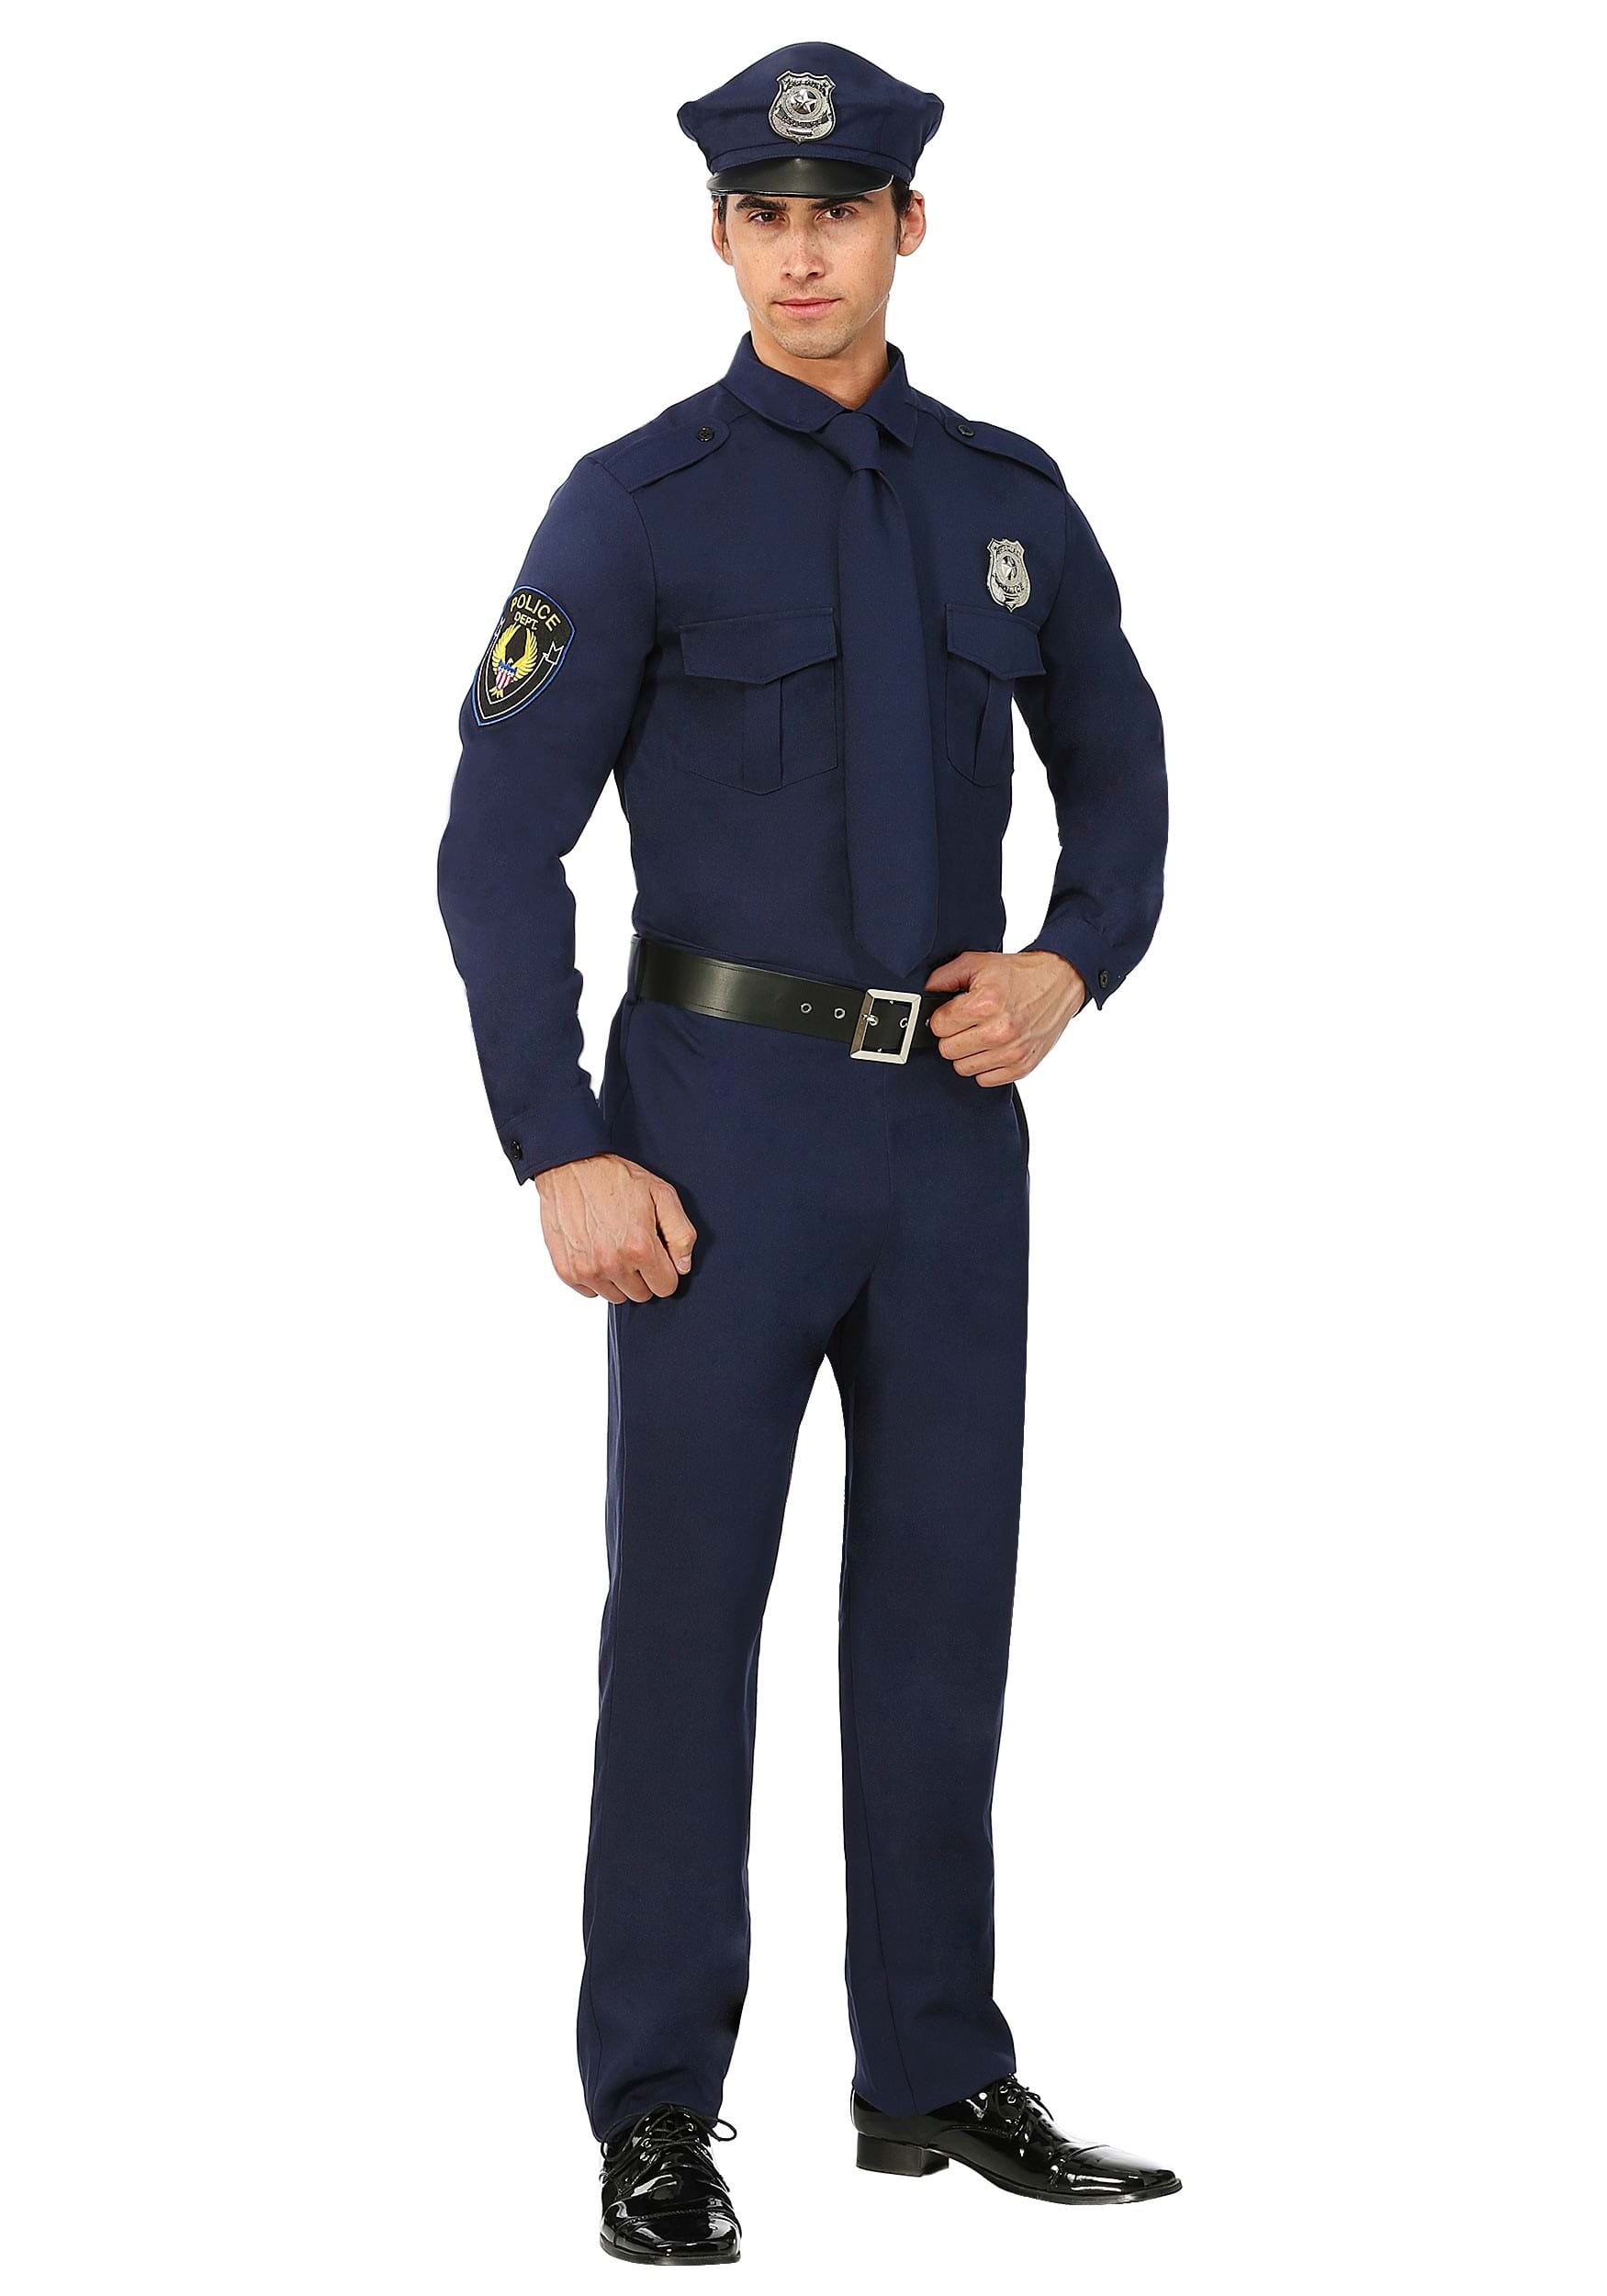 Men's Cop Costume | Men's Law Enforcement Costume